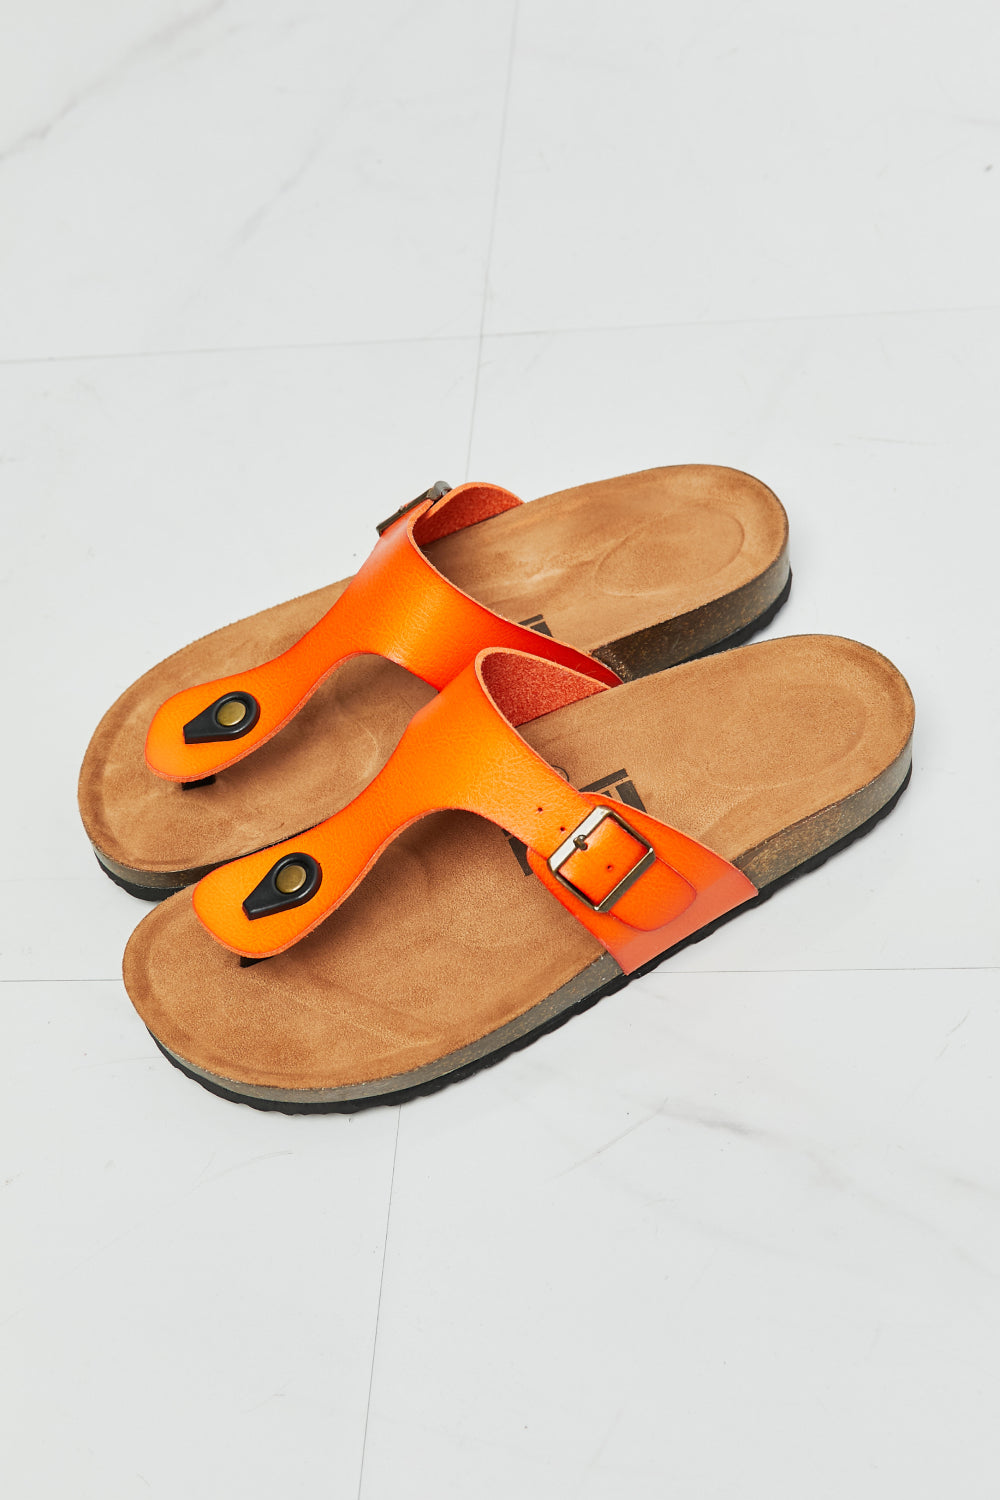 MMShoes Drift Away T-Strap Flip-Flop in Orange - Tigbul's Fashion